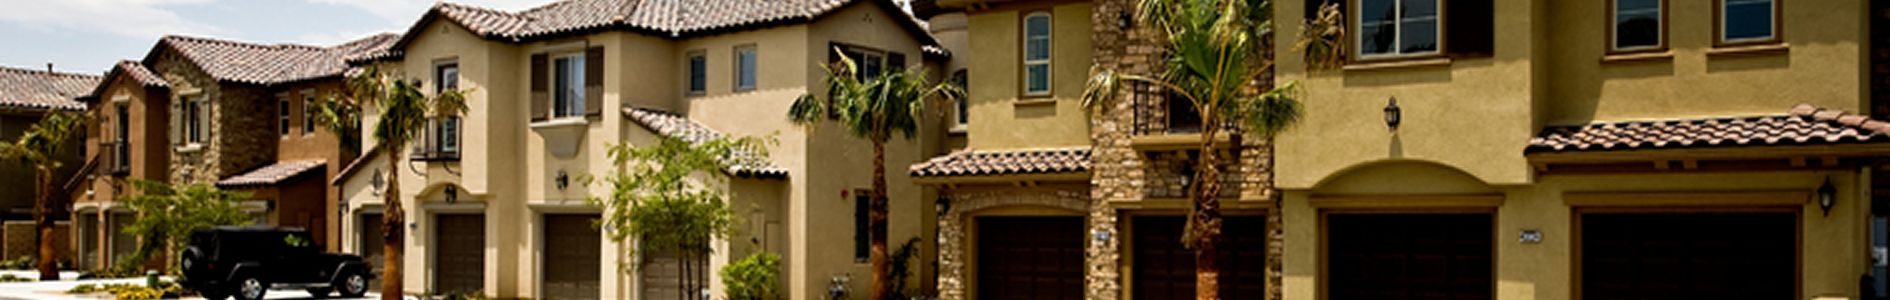 FHA Appraisals Southern California Appraisals